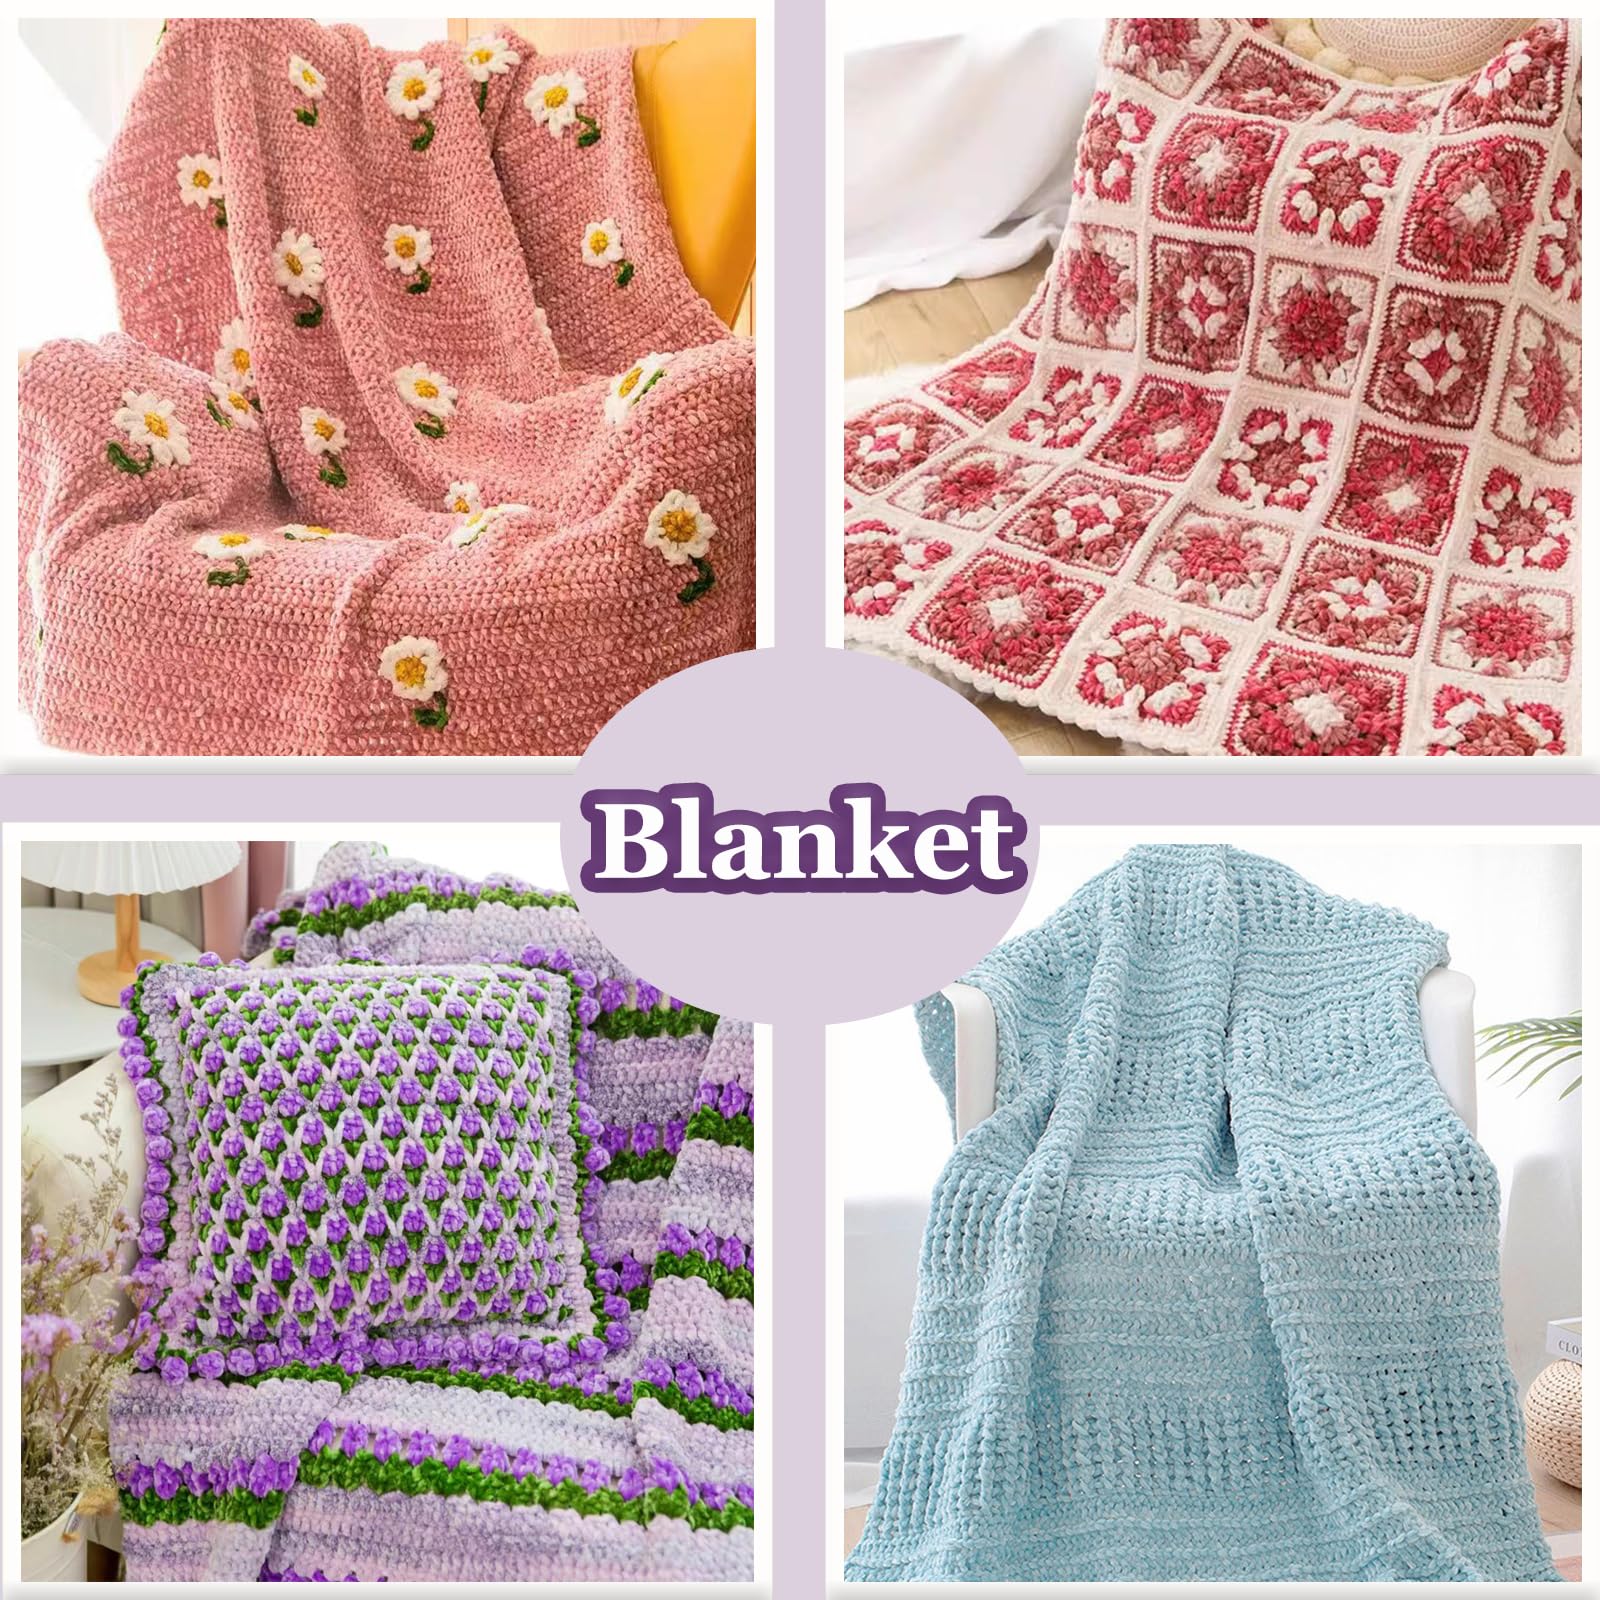 4 PCS 400g Soft Chenille Yarn Velvet Yarn for Crocheting,Fluffy Yarn for Knitting and Crochet DIY Craft,Warm Yarn for Blanket Bag Hat Scarve Clothe Gloves Slippers Doll（Bright Green）